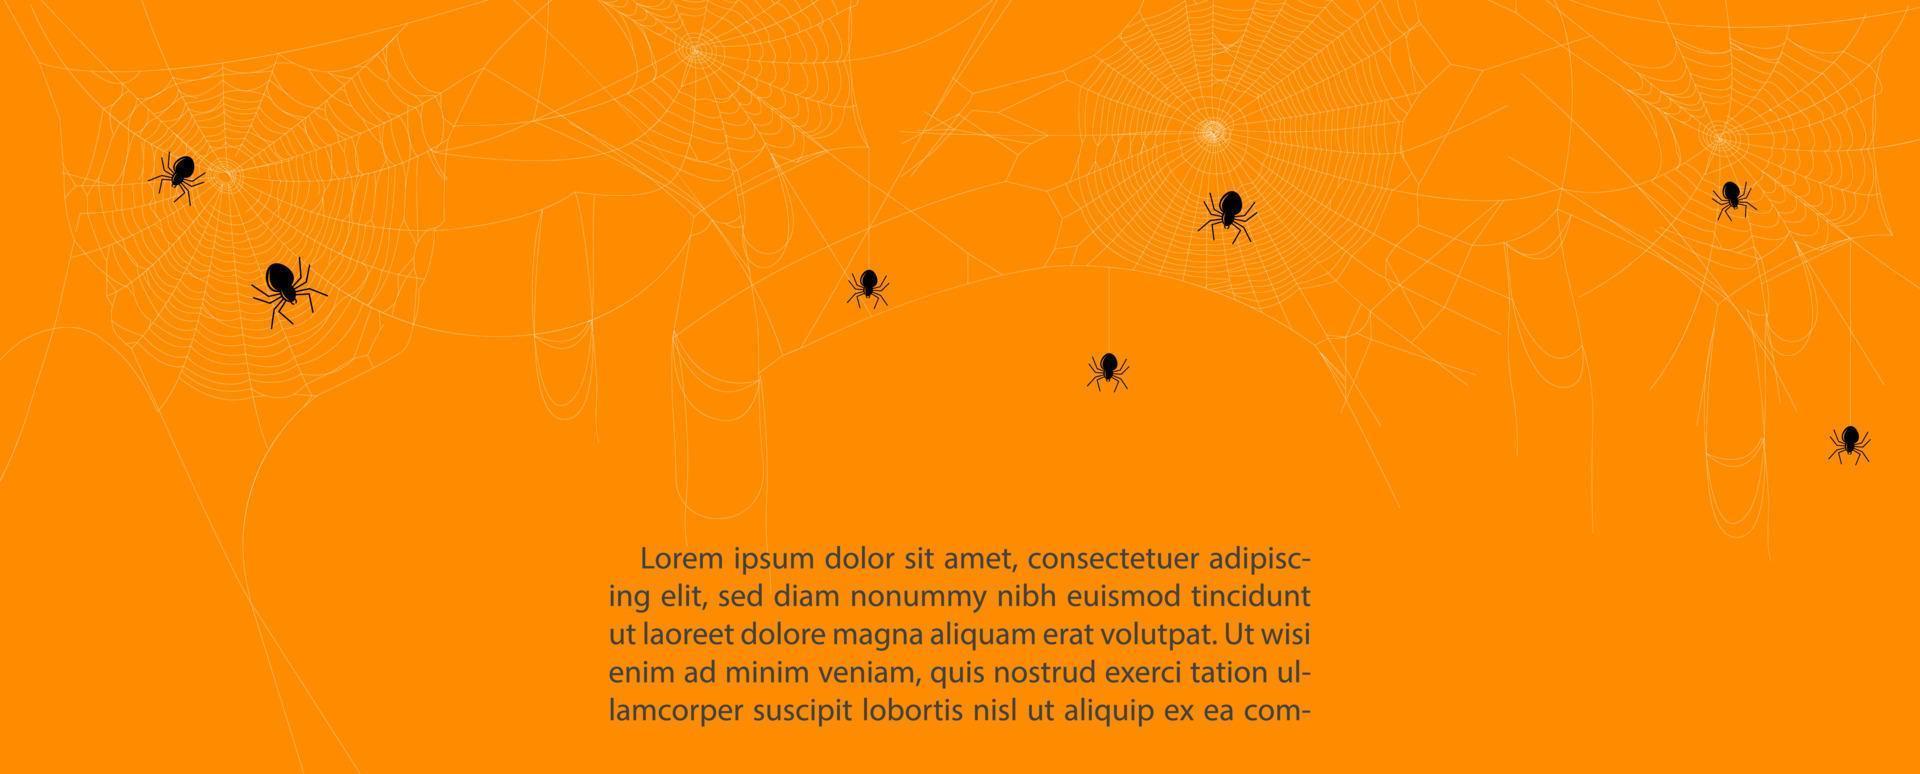 araña negra con telaraña y textos de ejemplo sobre fondo naranja. vector